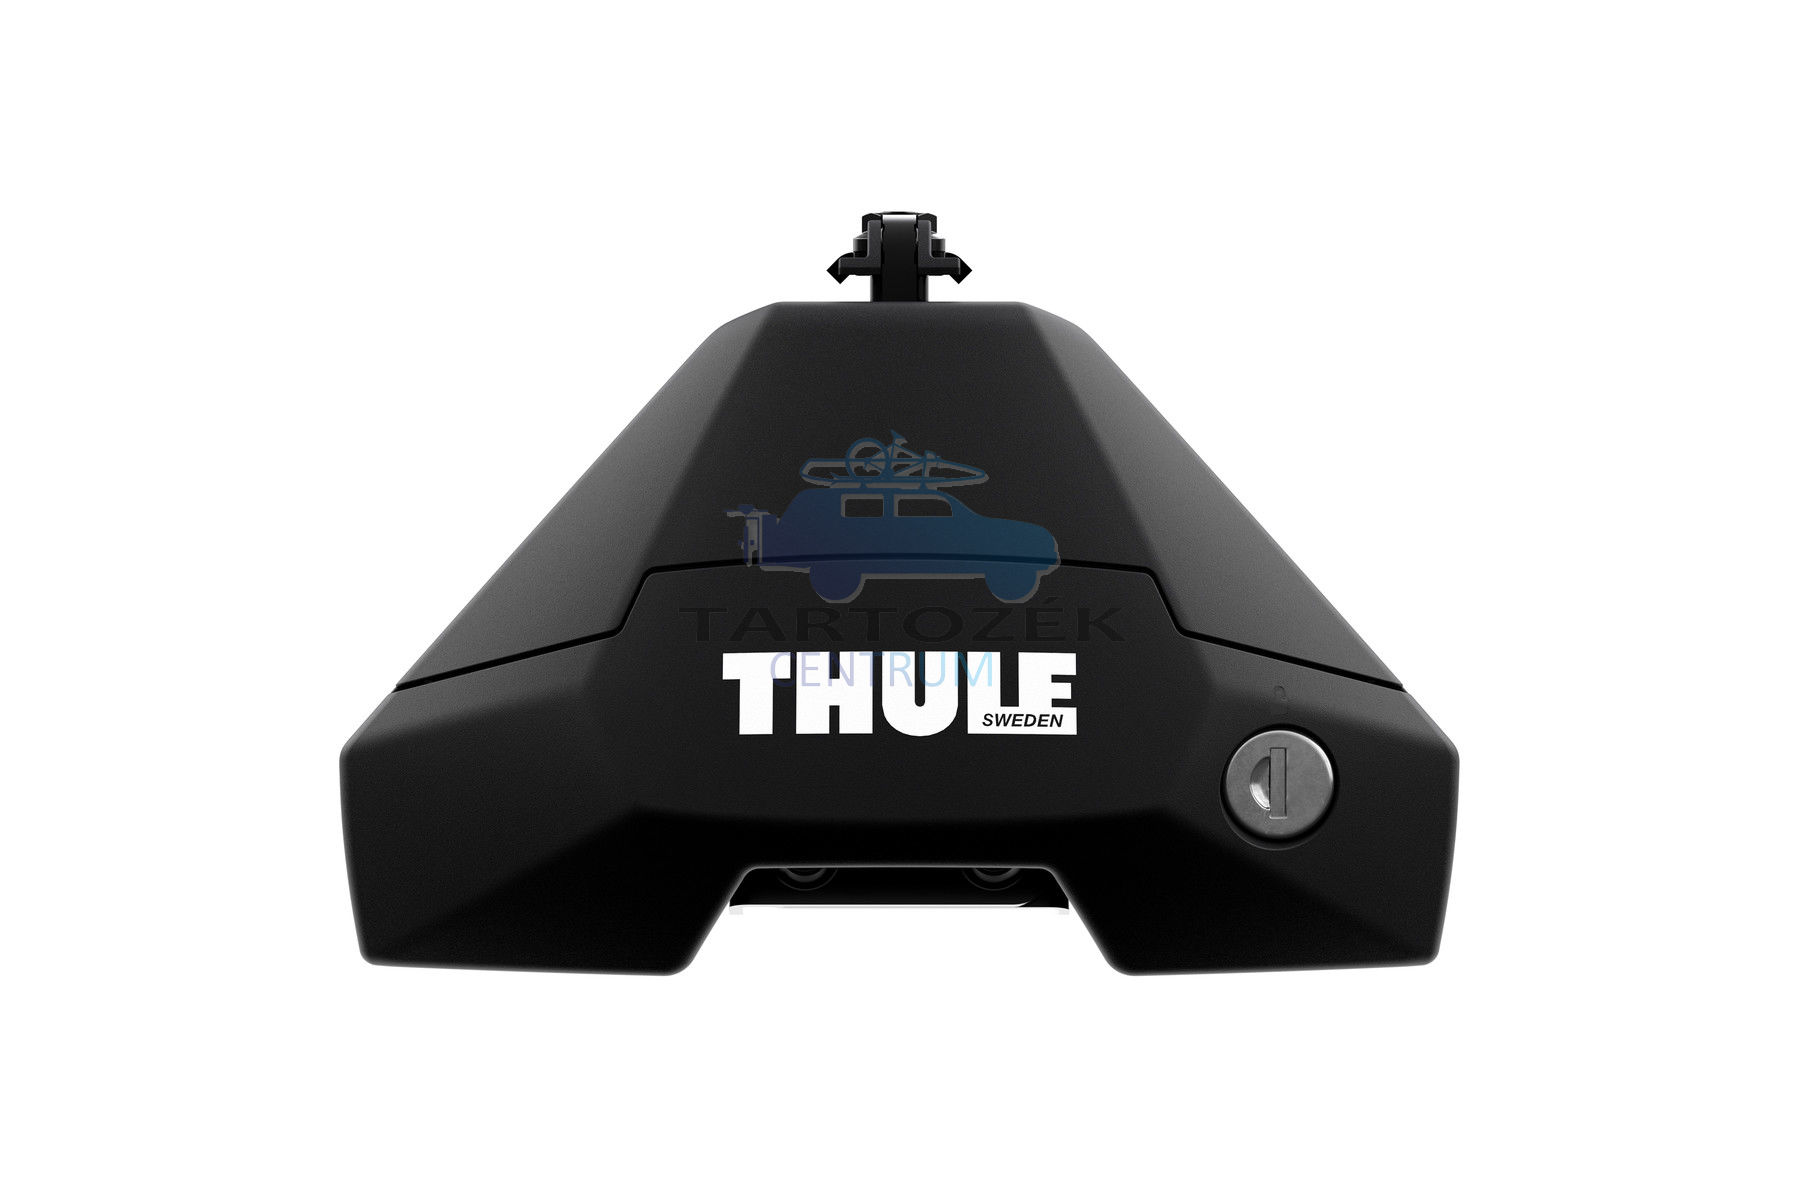 Thule Evo 7105 csomagtartó talp